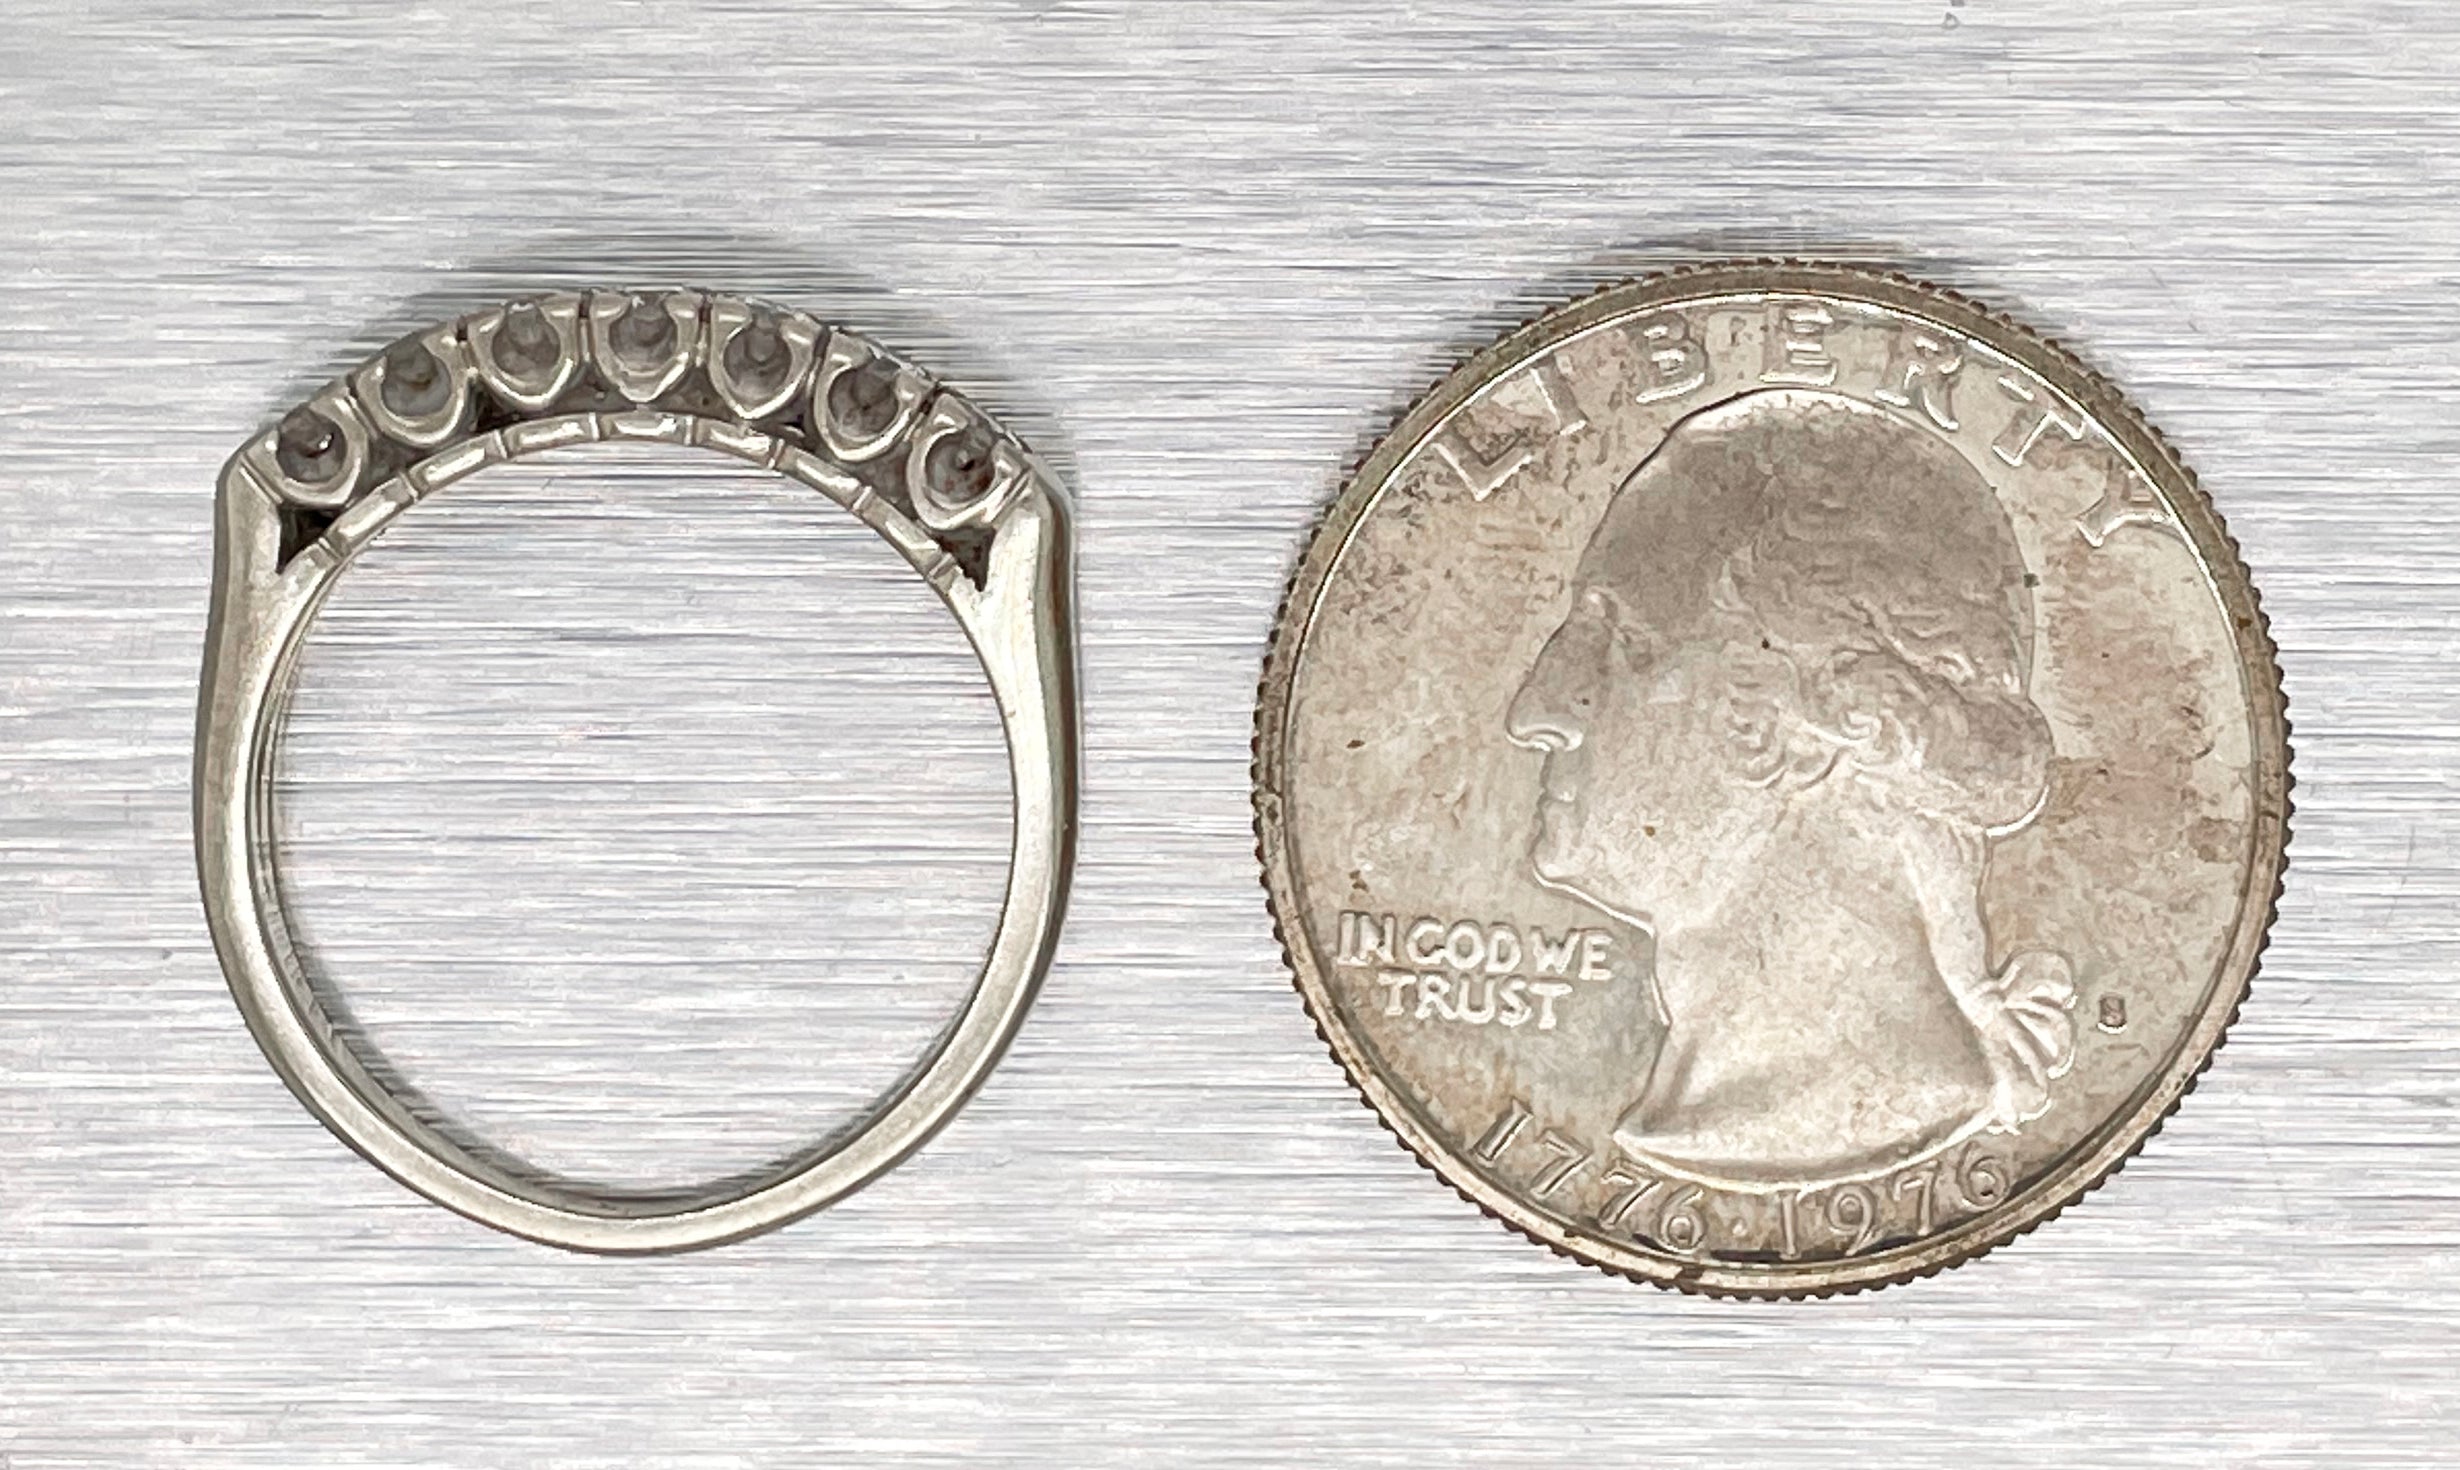 Antique Art Deco 0.50ctw Diamond Row Wedding Band Ring in 14k White Gold